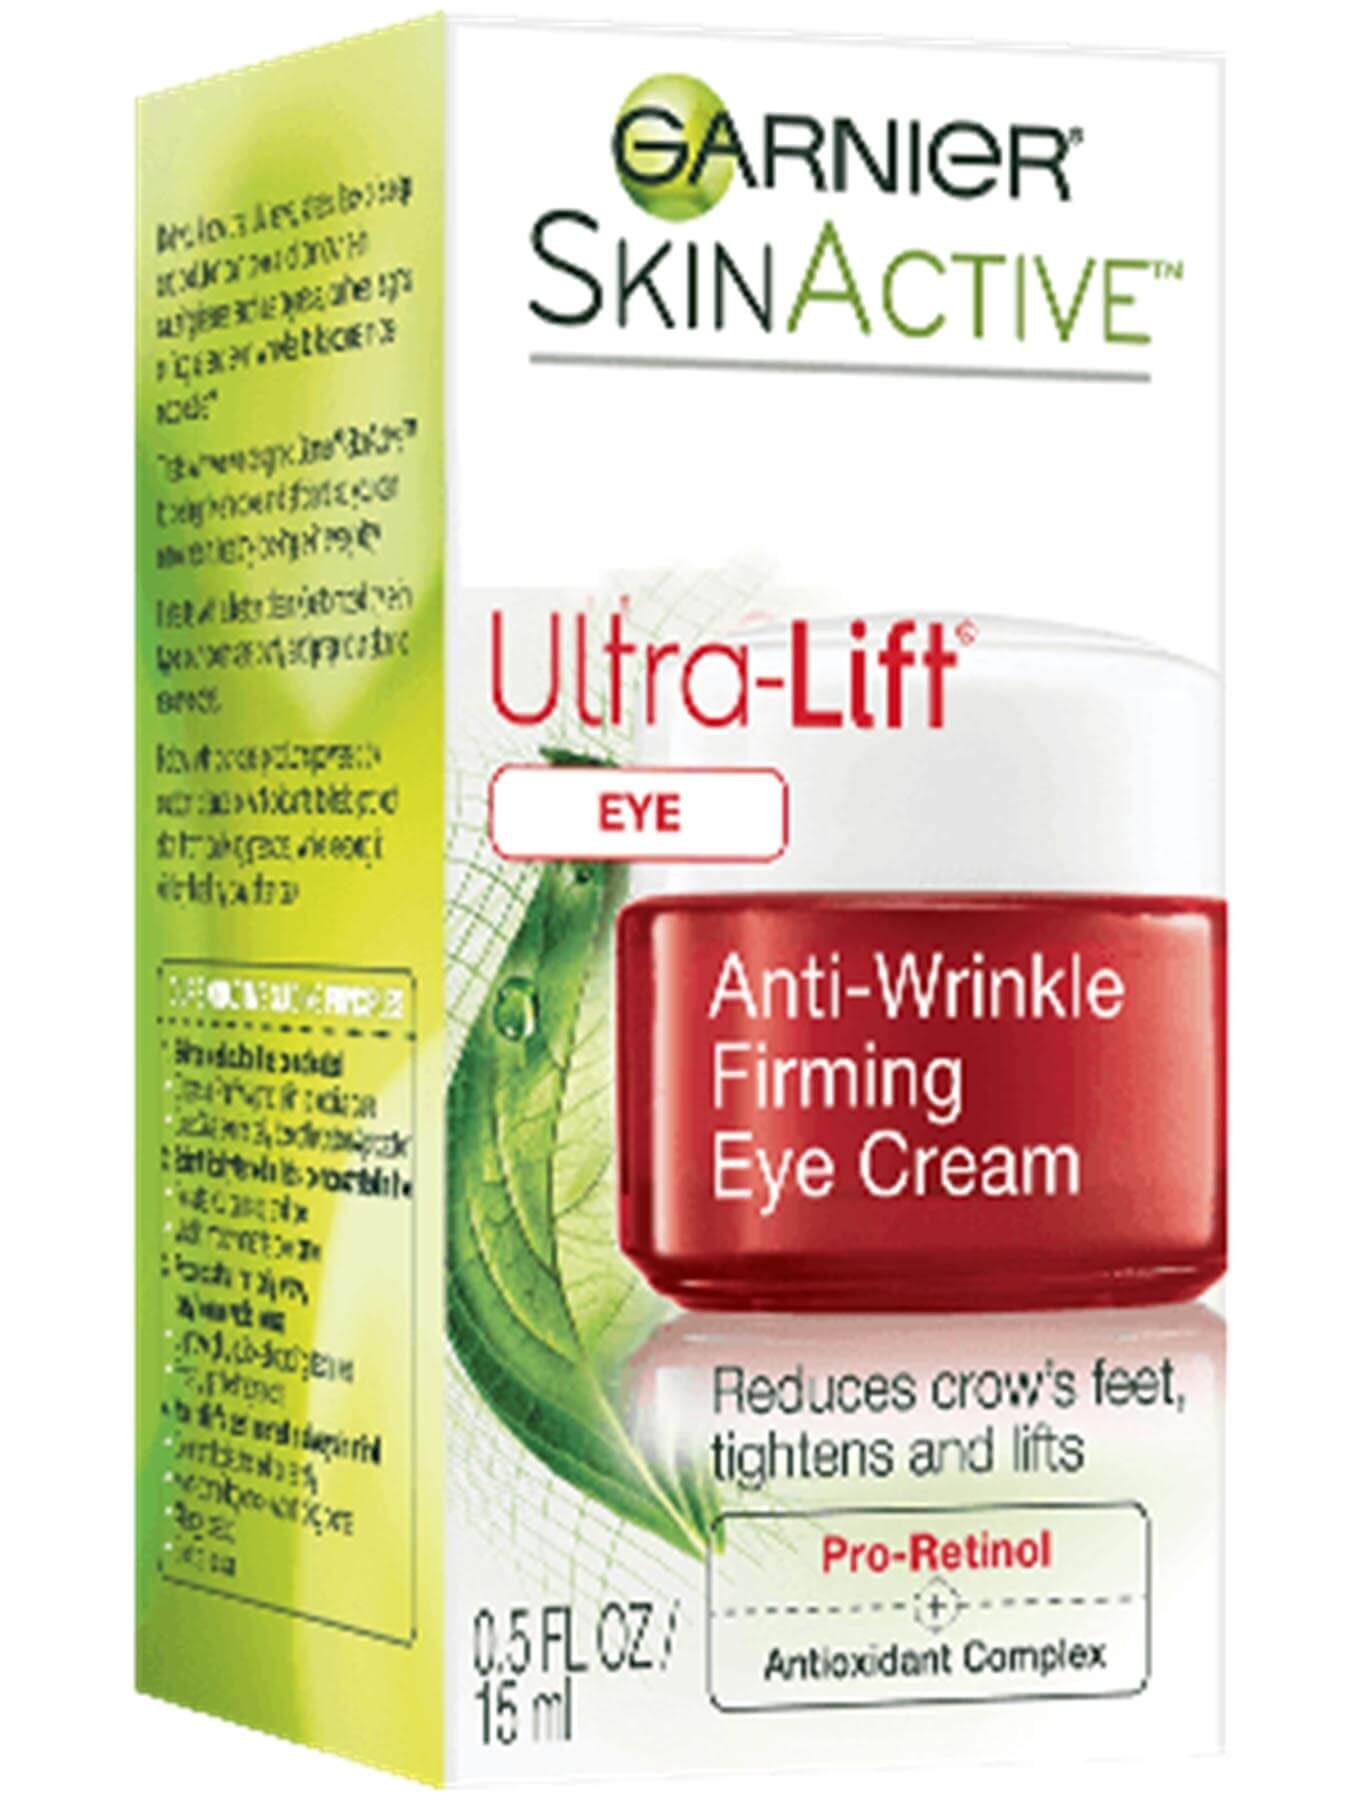 garnier_skinactive_ultra_lift_anti_wrinkle_eye_cream_skin care_2